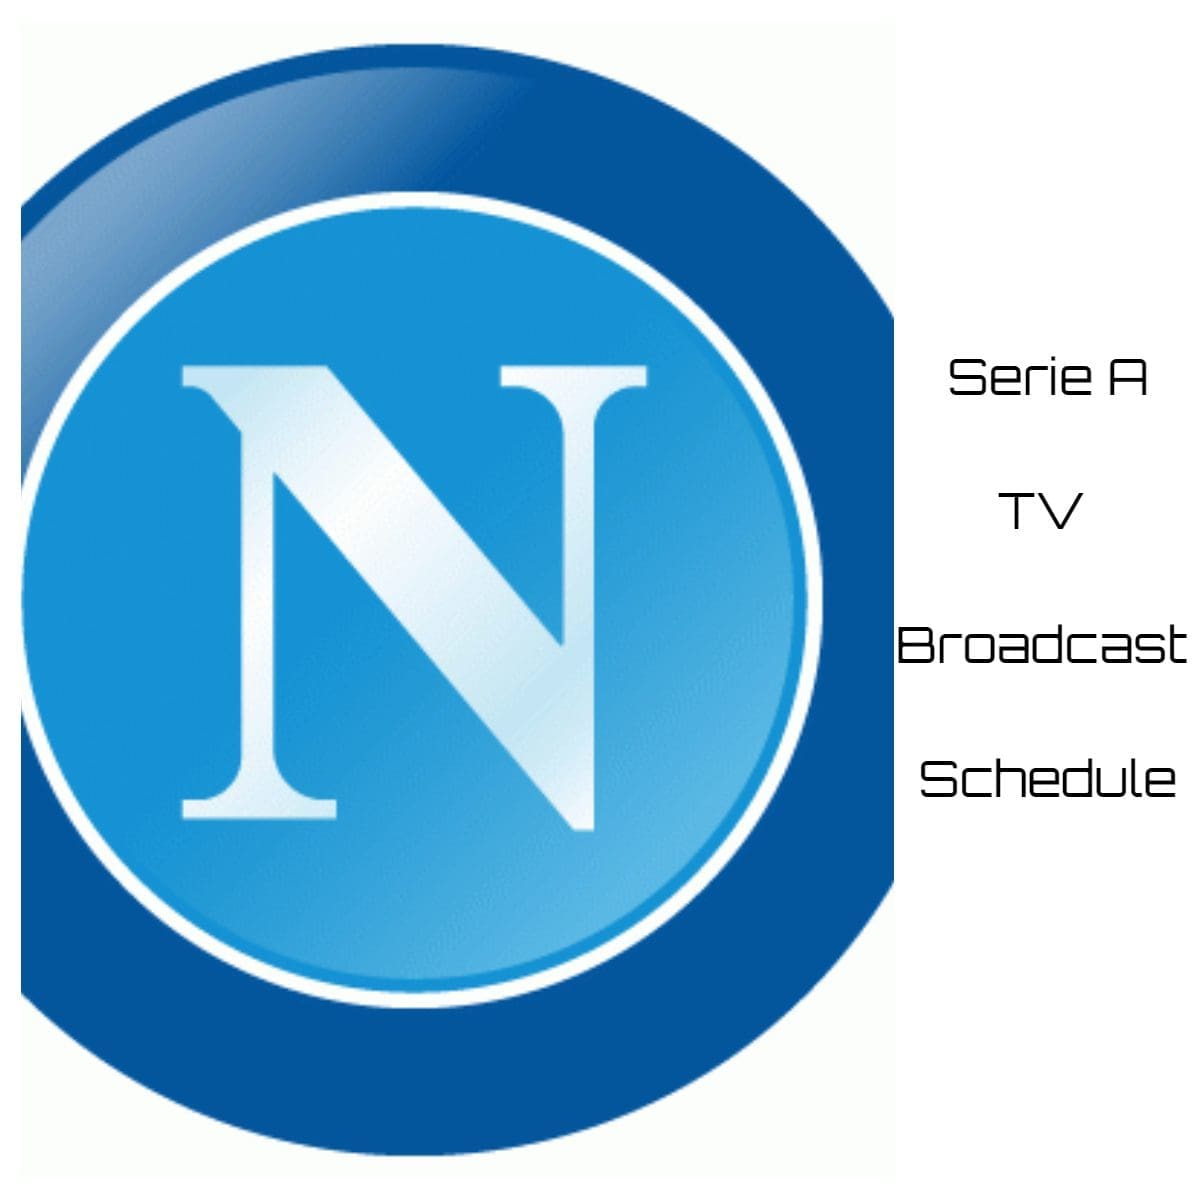 Napoli TV Broadcast Schedule